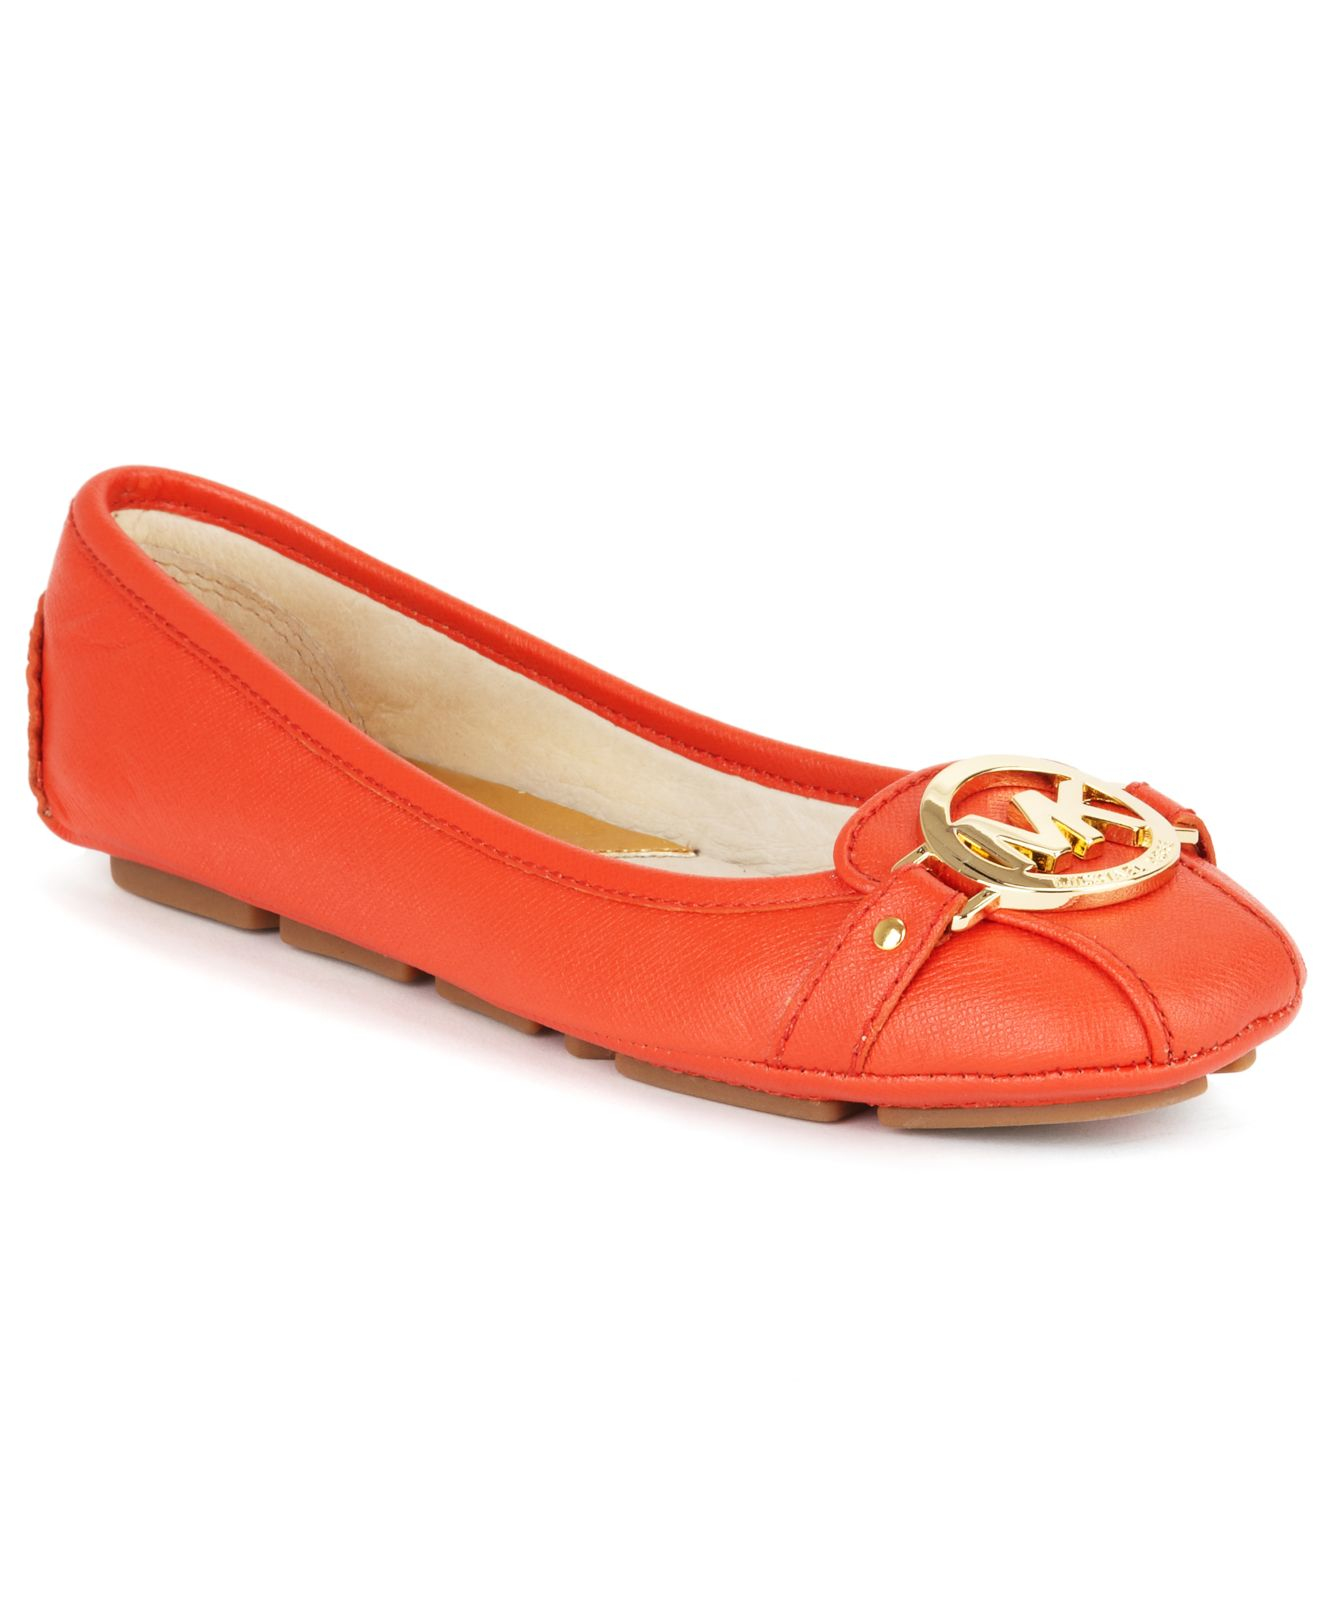 michael kors orange shoes